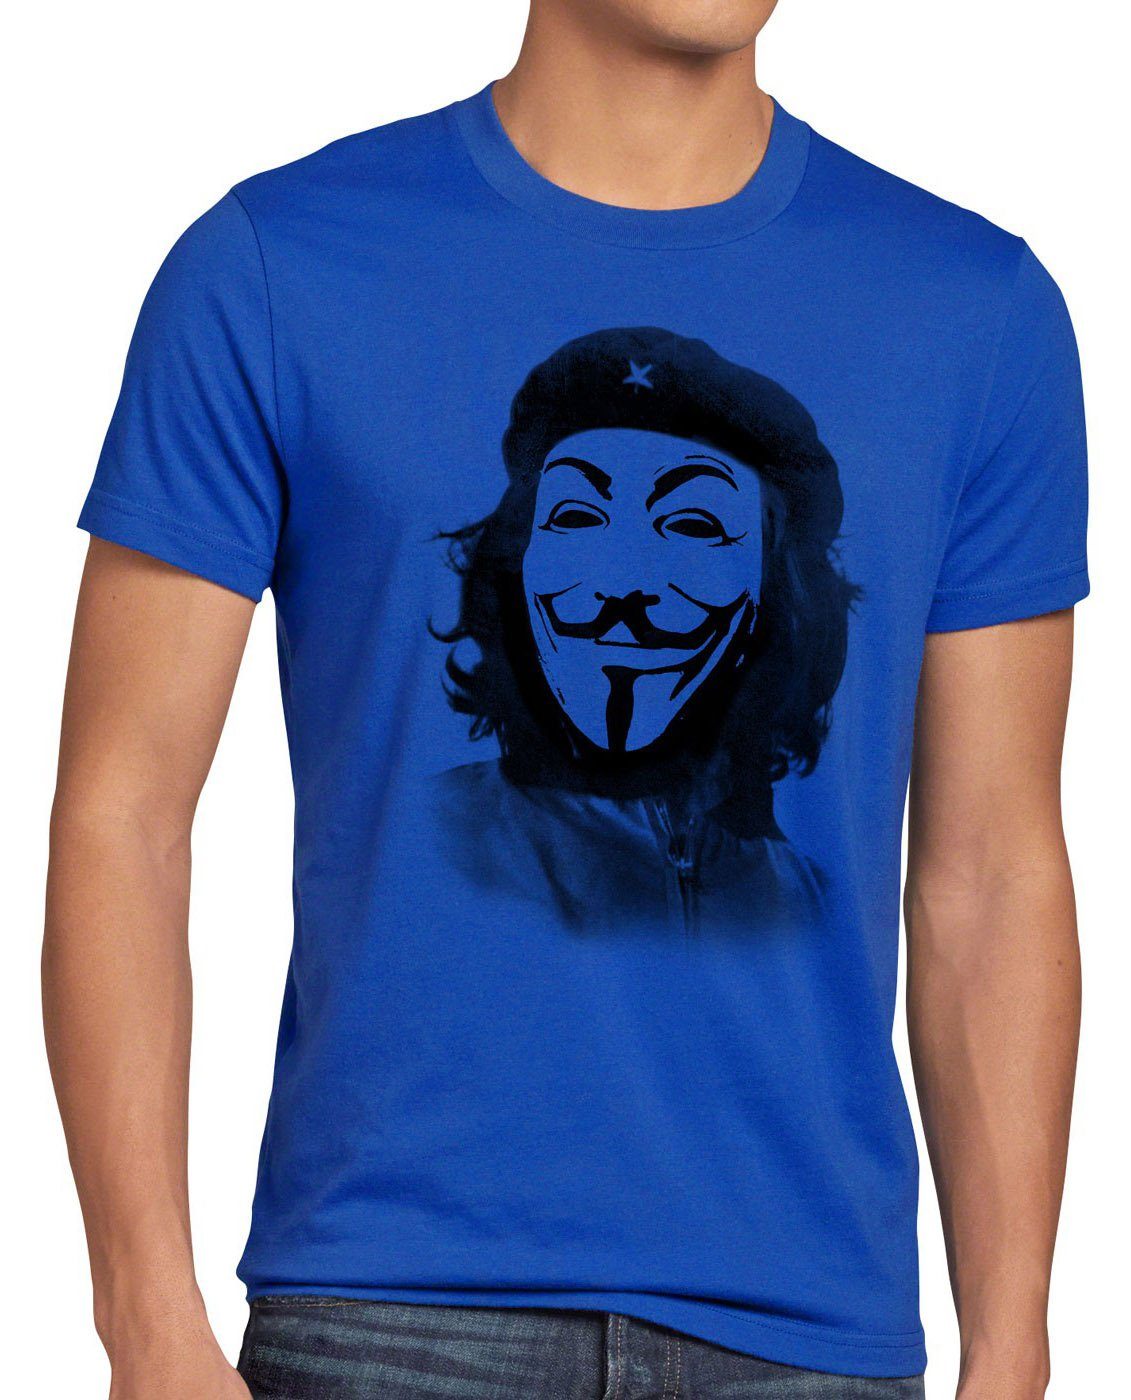 T-Shirt blau Anonymous maske Che Herren fawkes g8 fawkes Guevara Print-Shirt kuba guy guy hacker style3 occupy